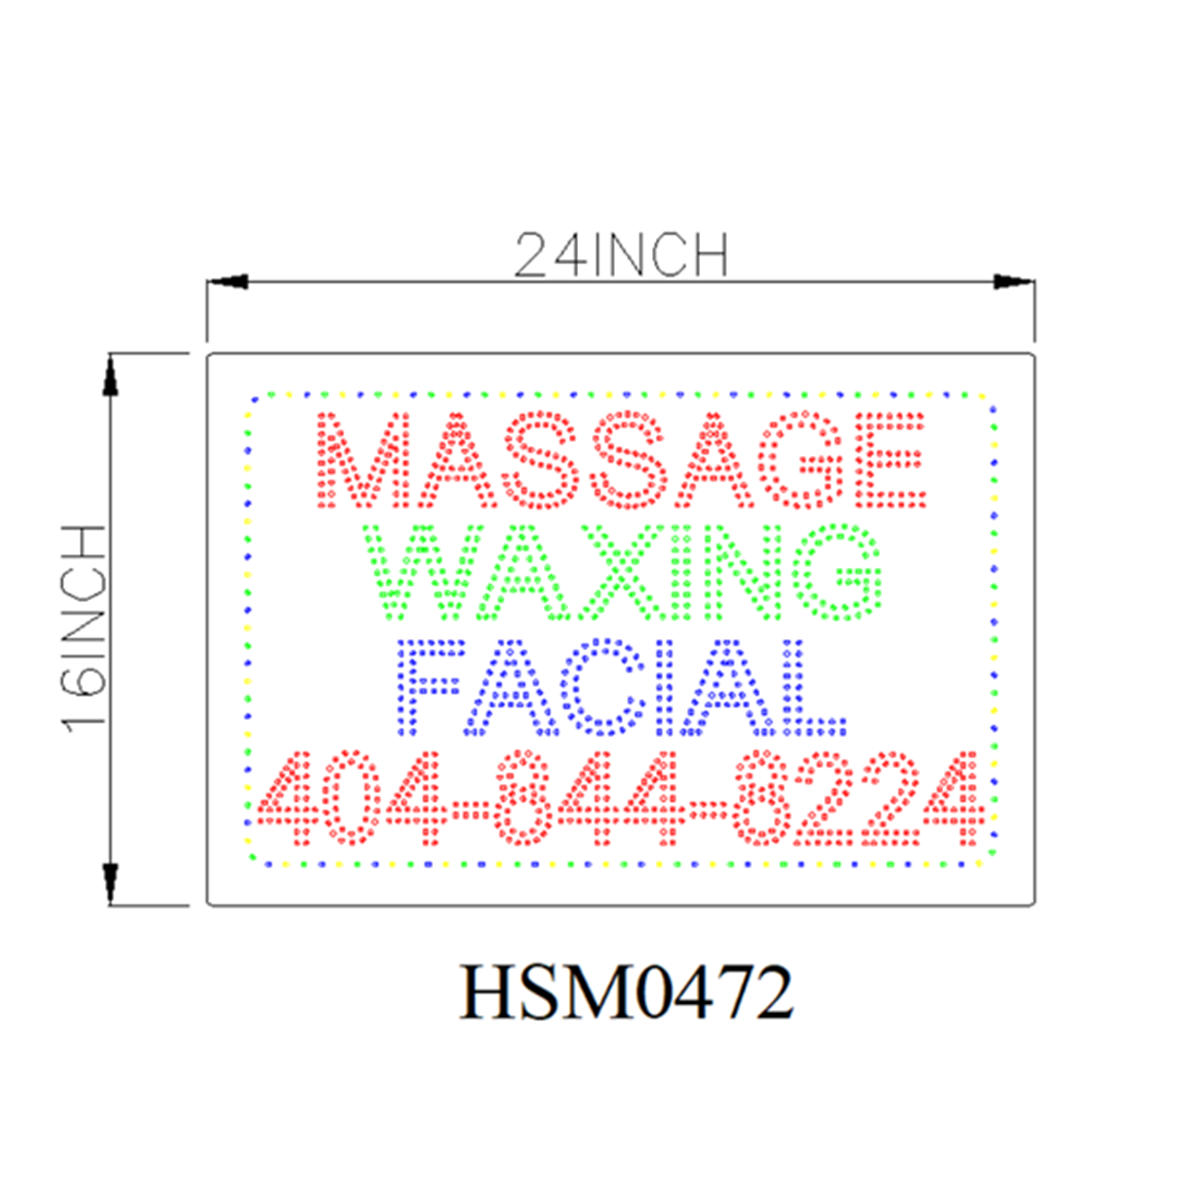 massage waxing led sign